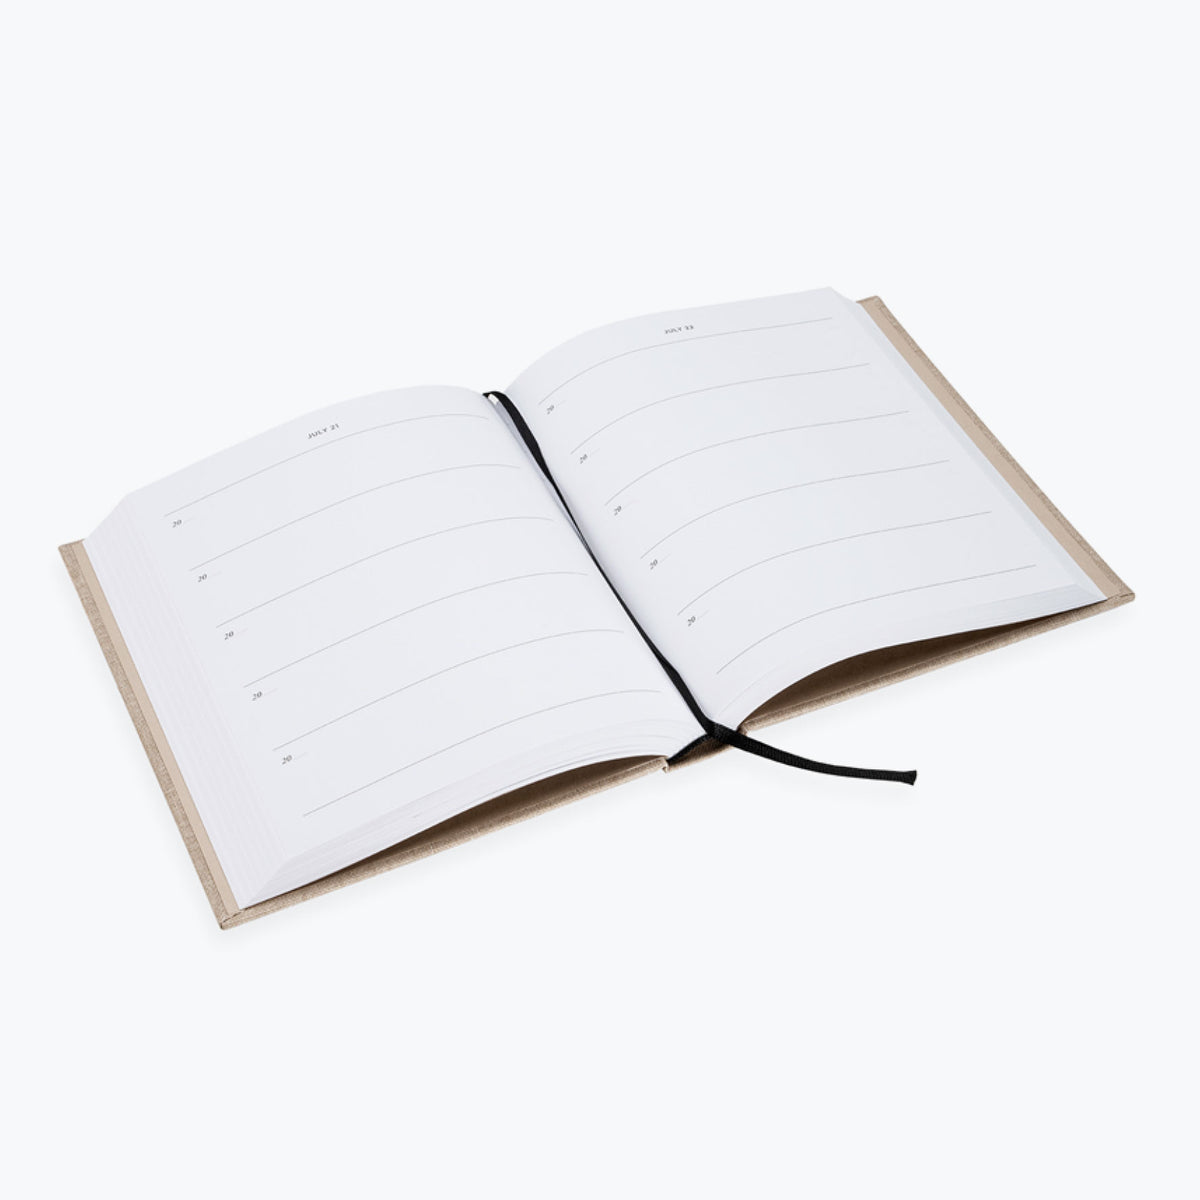 Bookbinders Design - Planner - 5 Year Diary - Light Grey